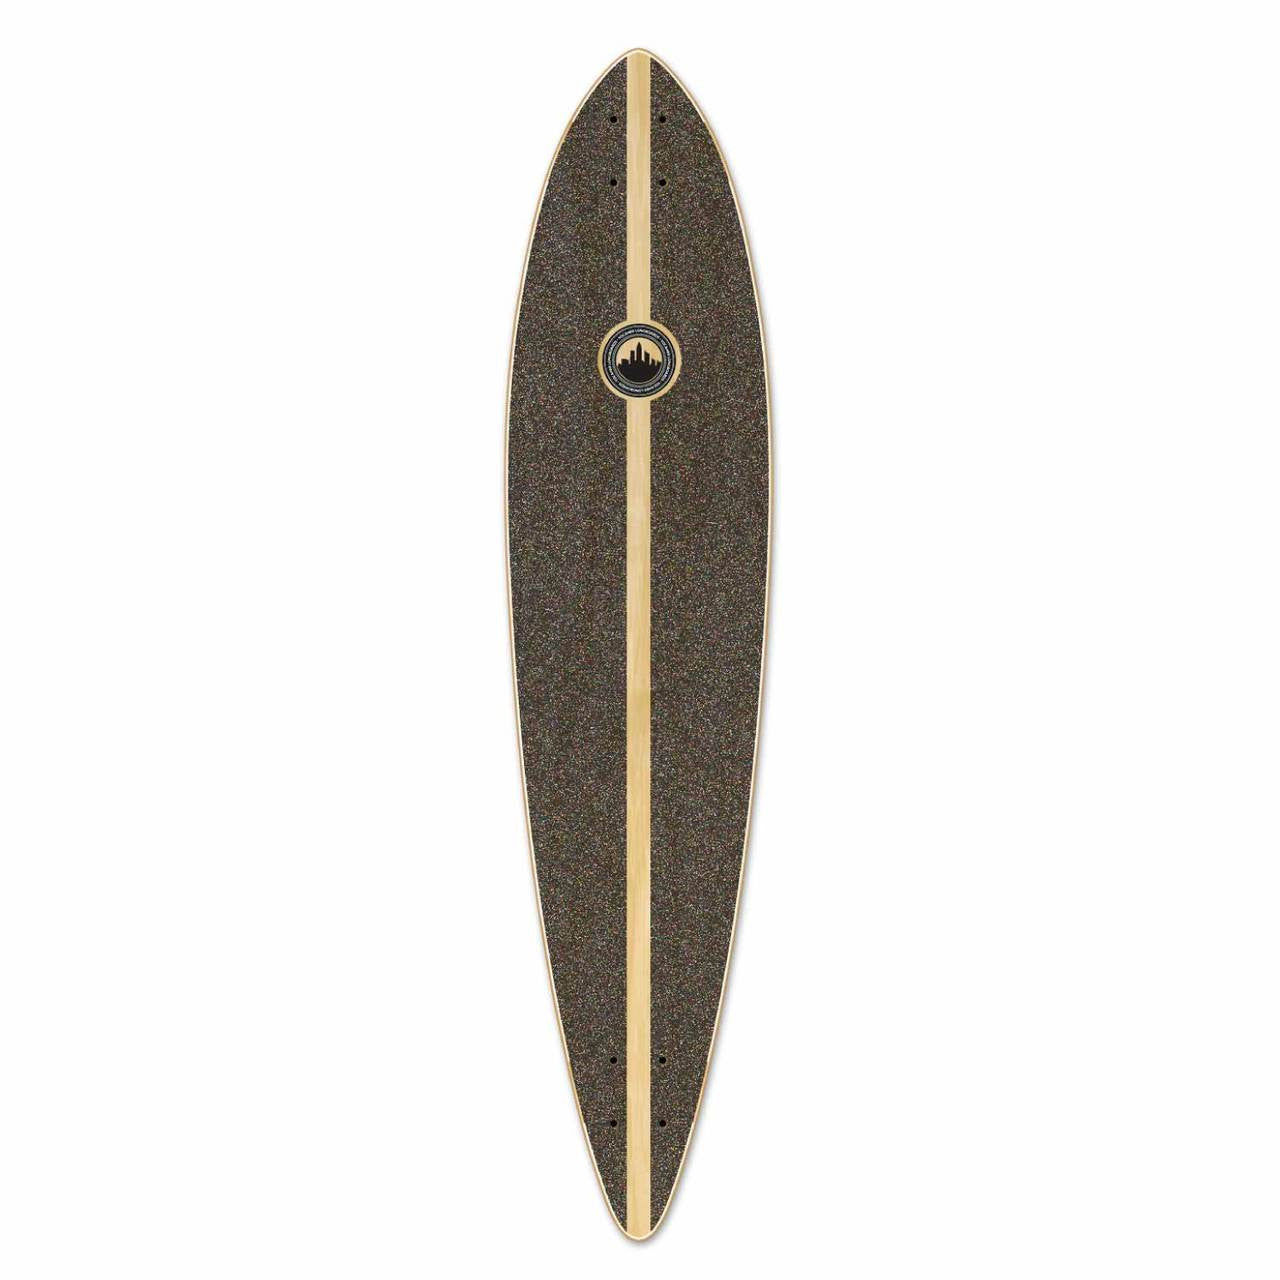 Yocaher Pintail Longboard Deck - Getaway